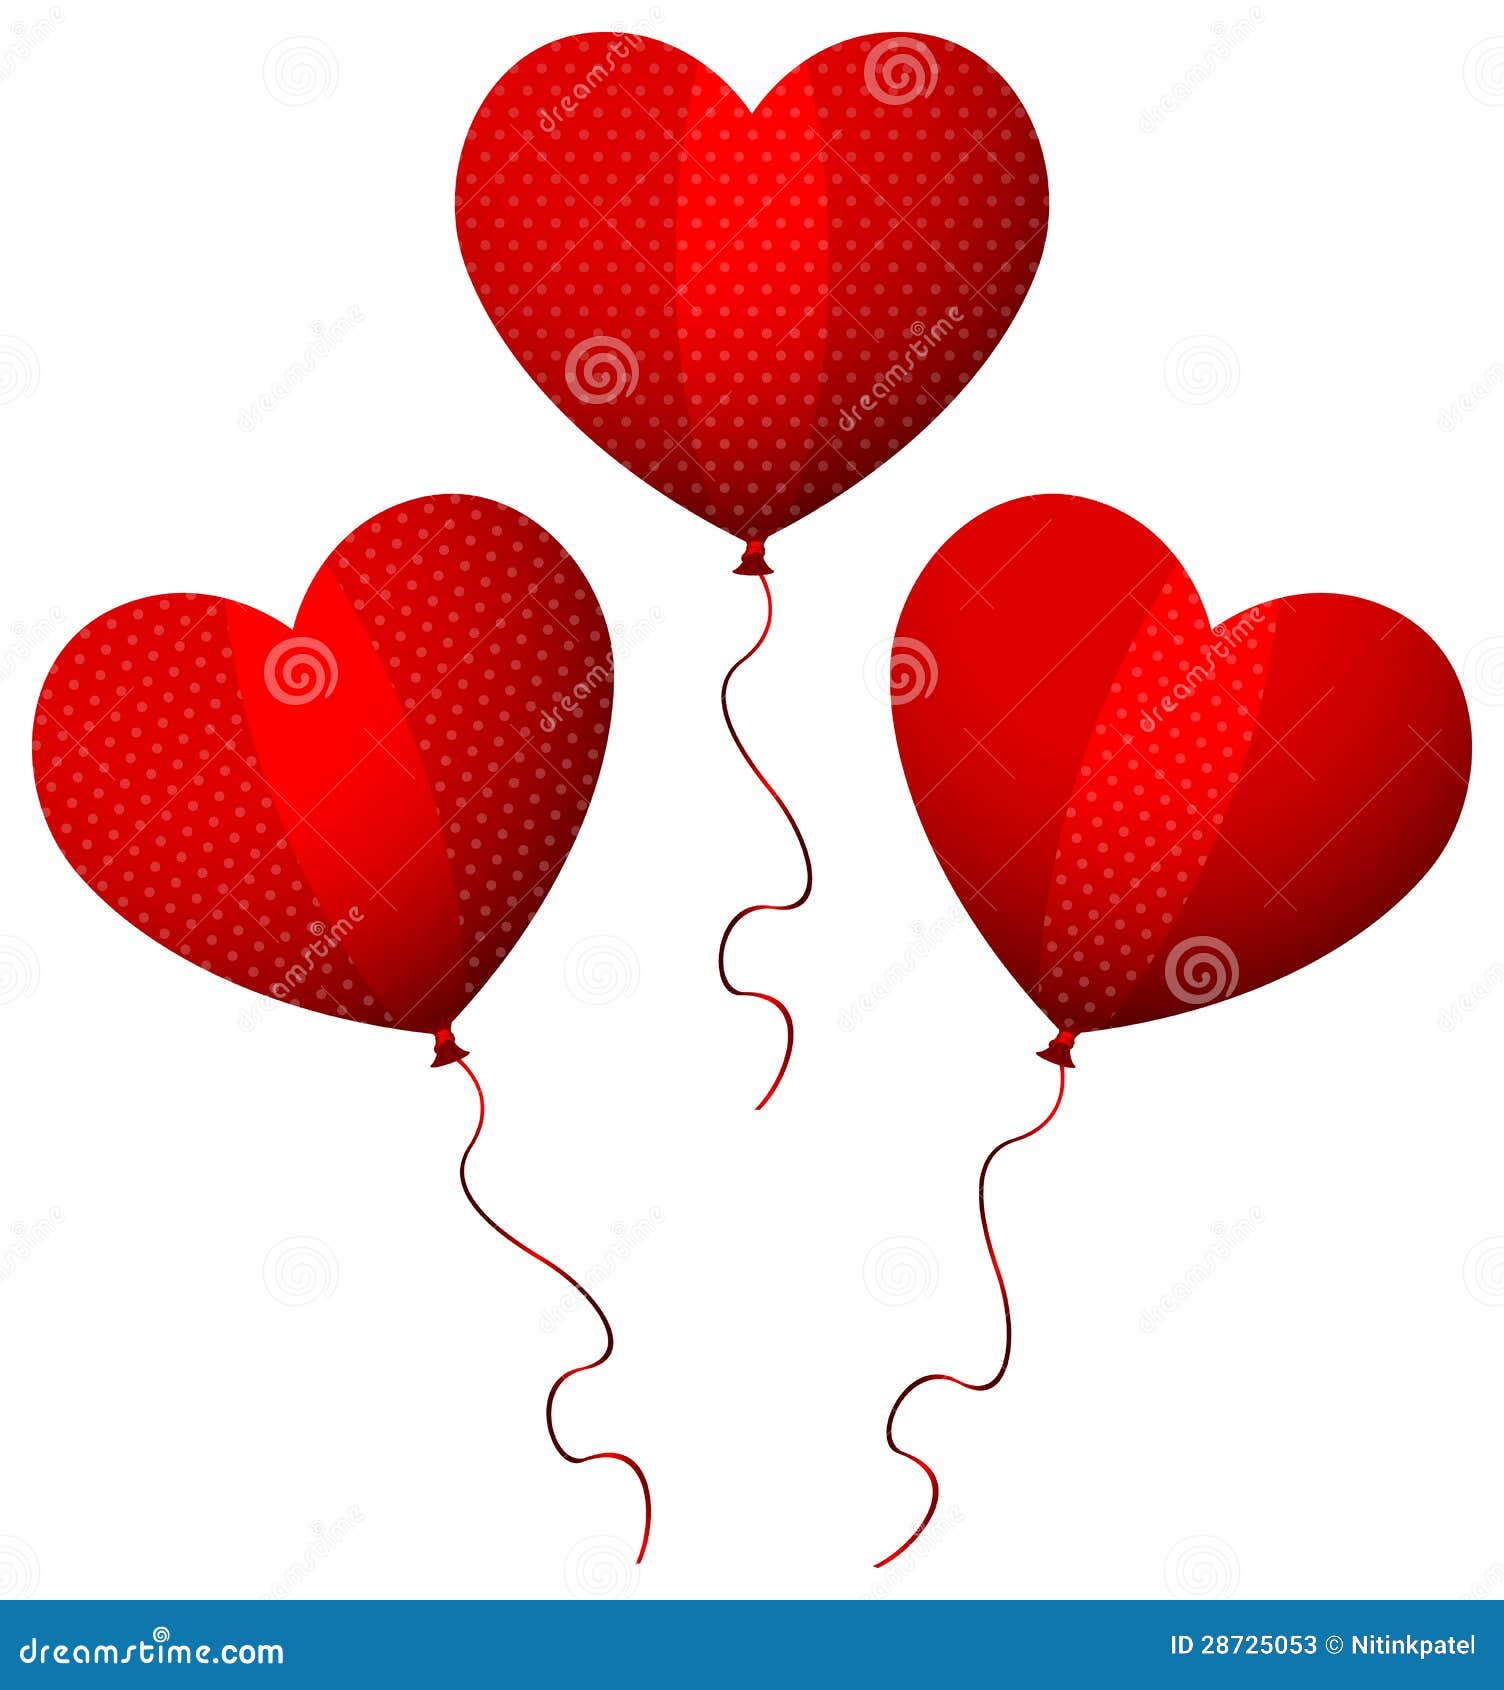 3 Designer Red Heart Balloons Stock Photos Image 28725053